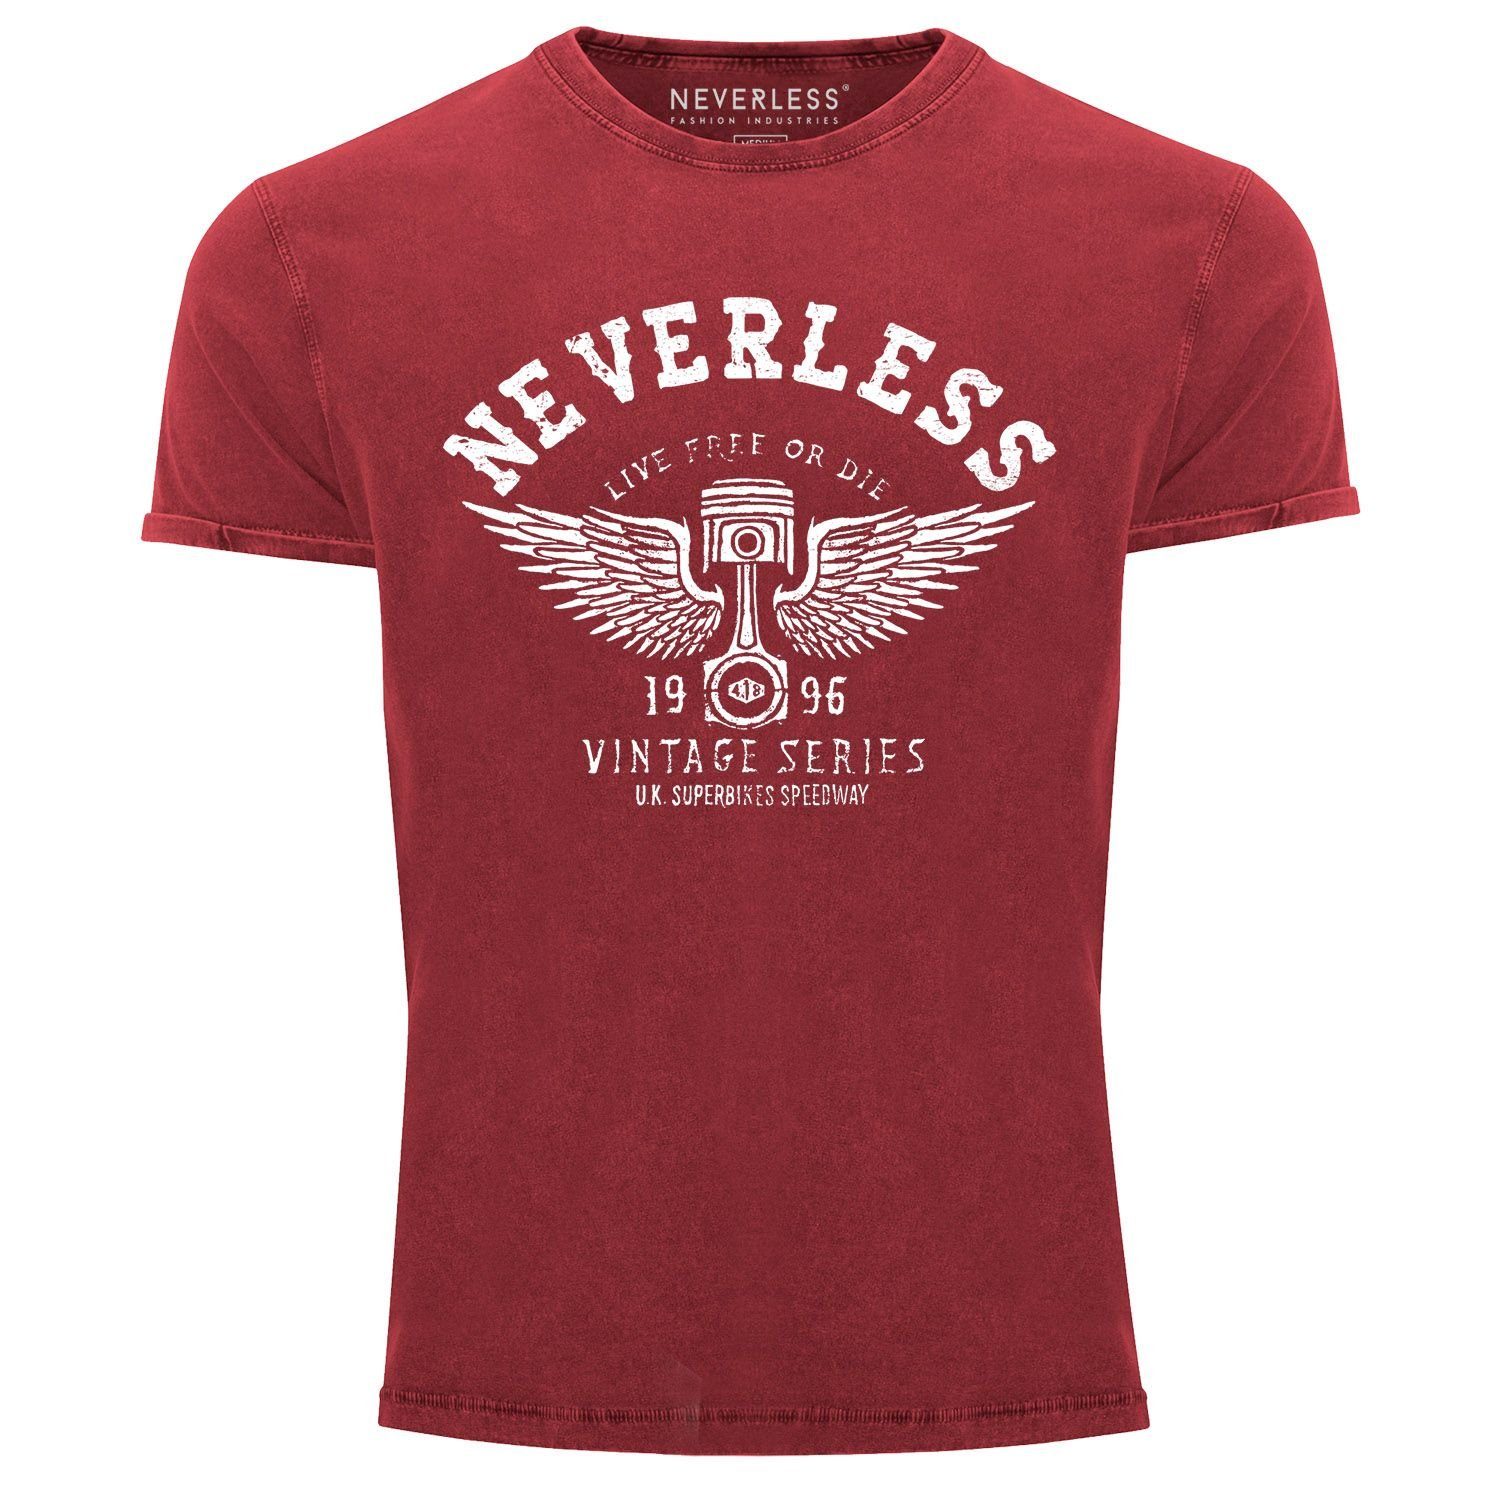 Neverless Print-Shirt Cooles Angesagtes Herren T-Shirt Vintage Shirt Retro Auto Kolben Used Look Slim Fit Neverless® mit Print rot